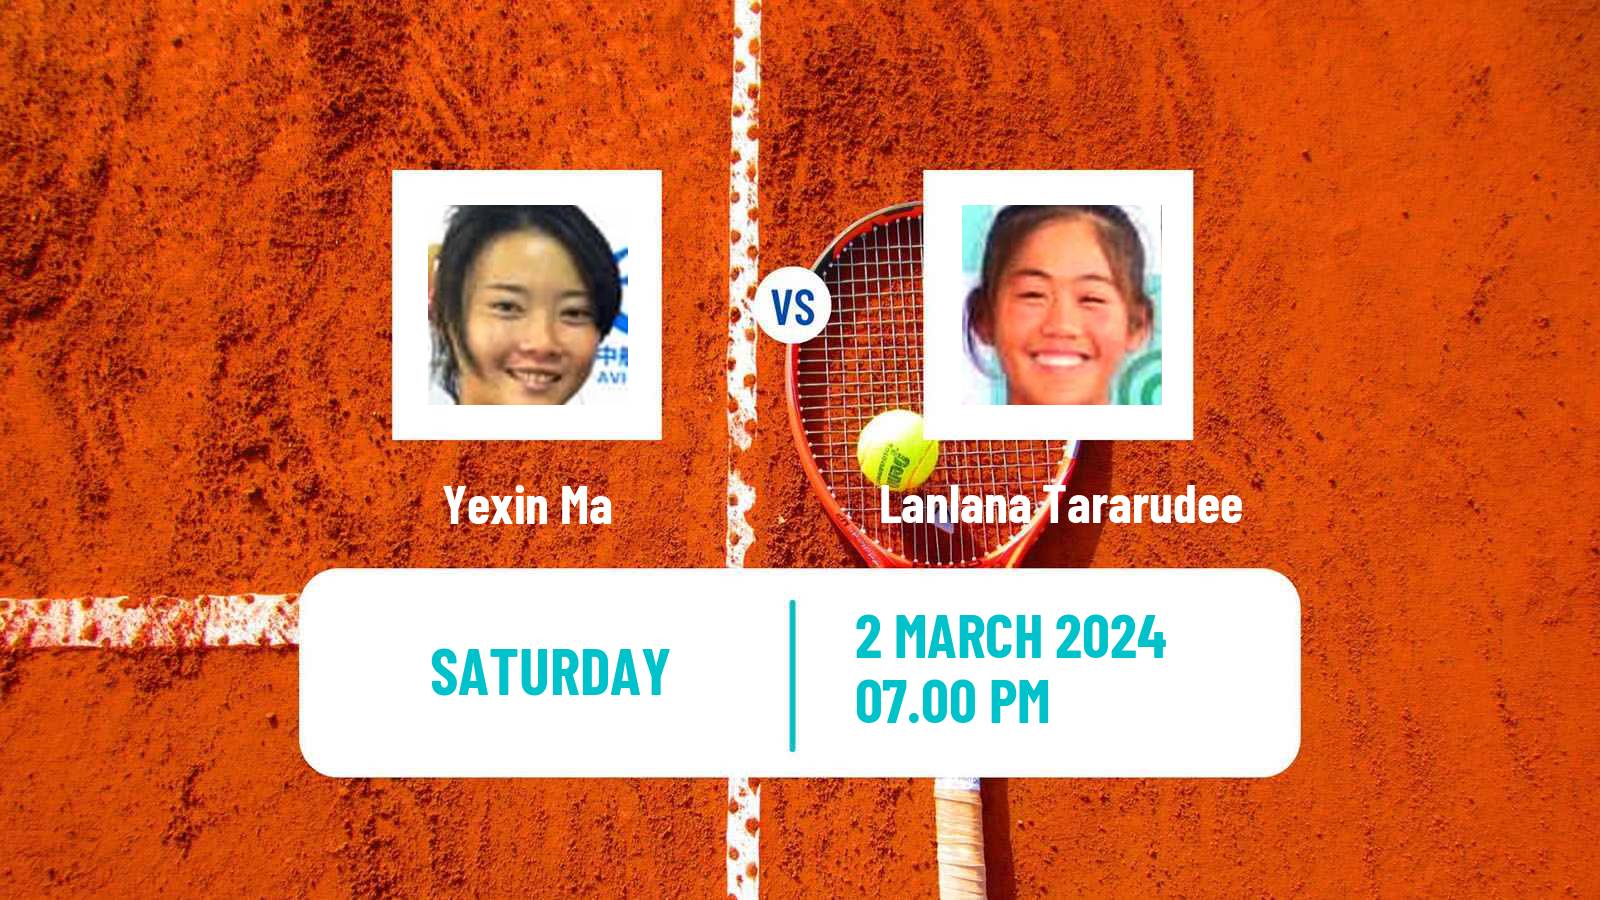 Tennis ITF W35 Traralgon 2 Women Yexin Ma - Lanlana Tararudee